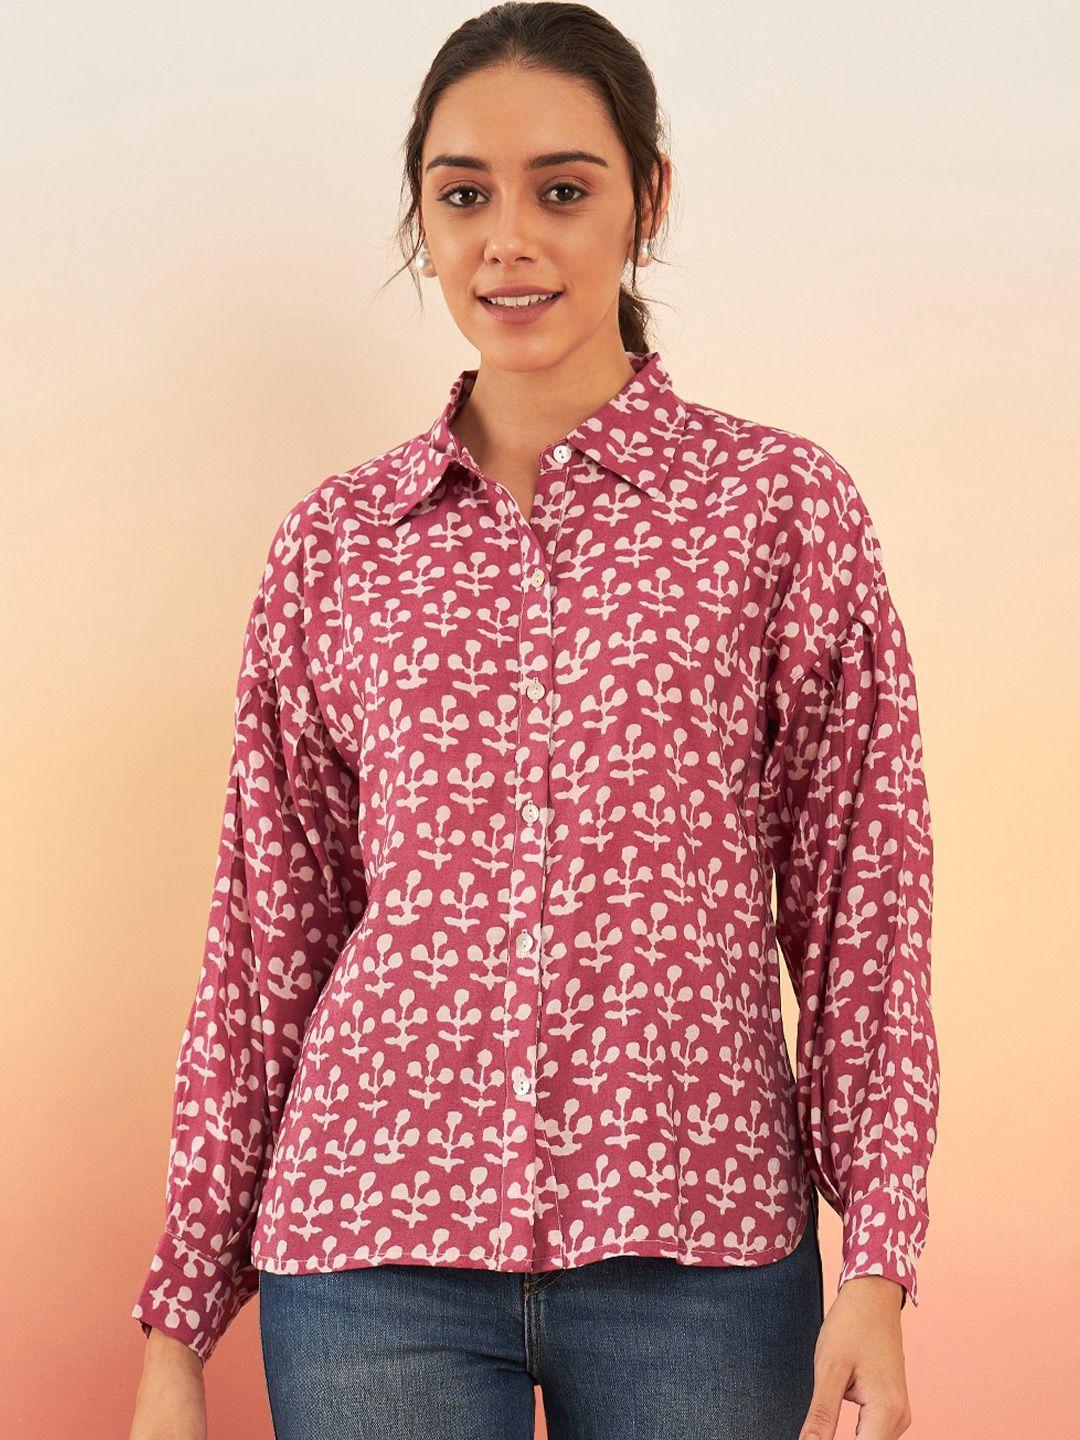 sangria-burgundy-&-off-white-ethnic-motifs-printed-shirt-style-top